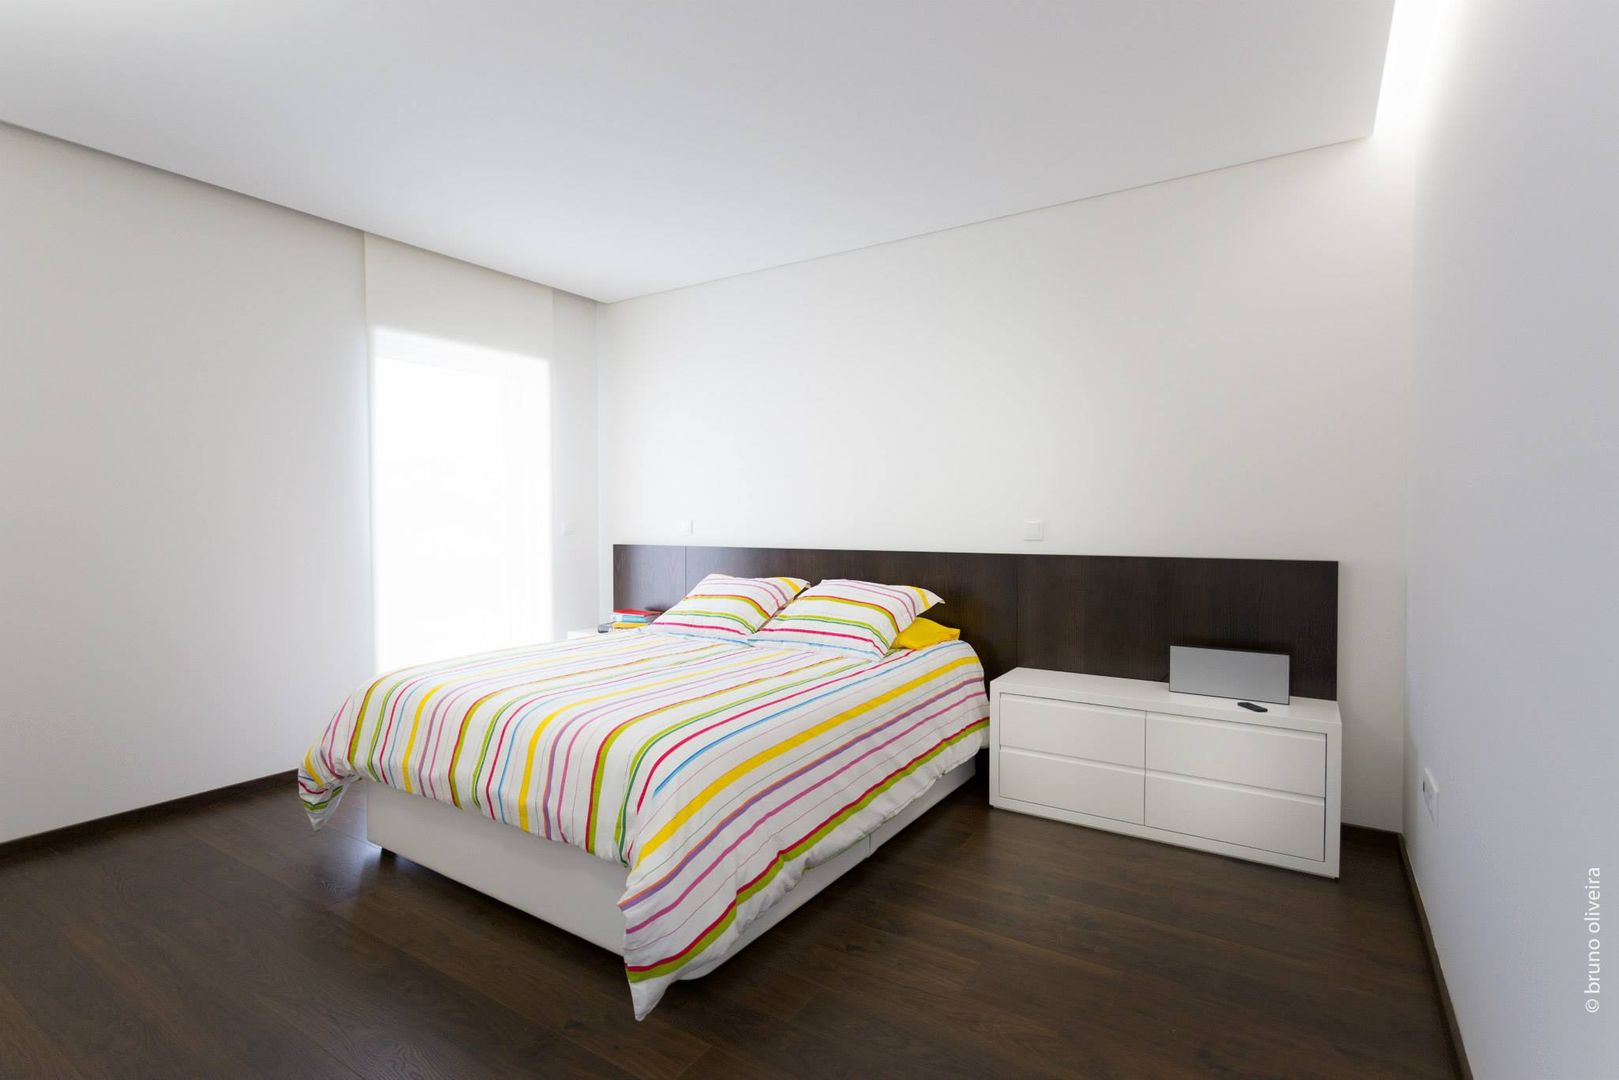 house 116, bo | bruno oliveira, arquitectura bo | bruno oliveira, arquitectura Moderne slaapkamers Hout Hout